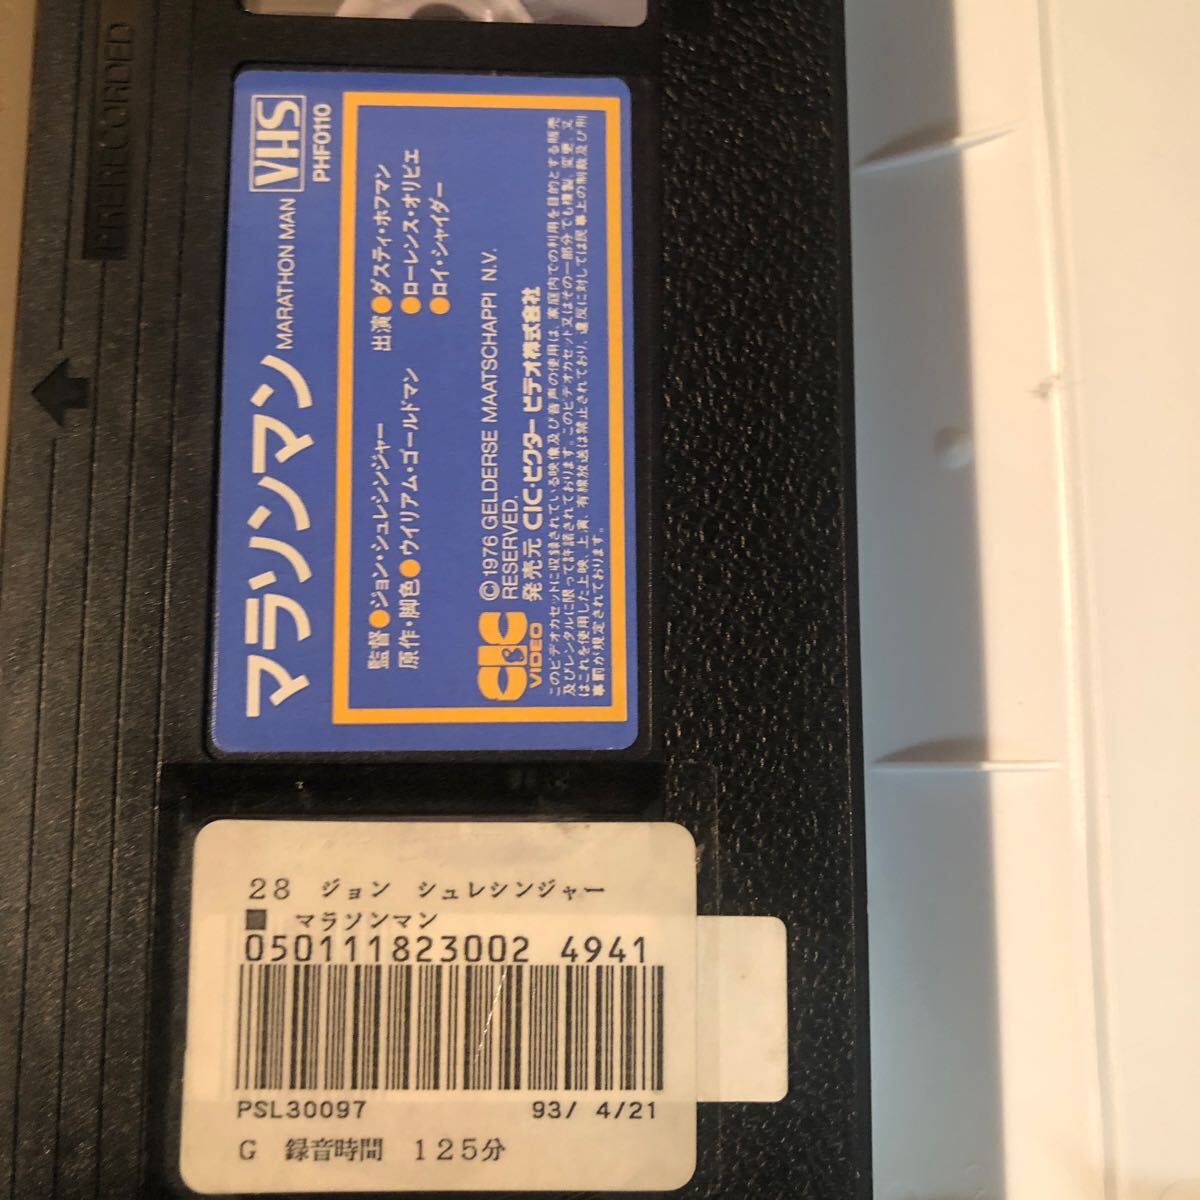 VHS◆マラソンマン(1976)◆アメリカ・字幕◆ダスティン・ホフマン/ローレンス・オリビエ/ロイ・シャイダー/マルト・ケラー ebの画像4